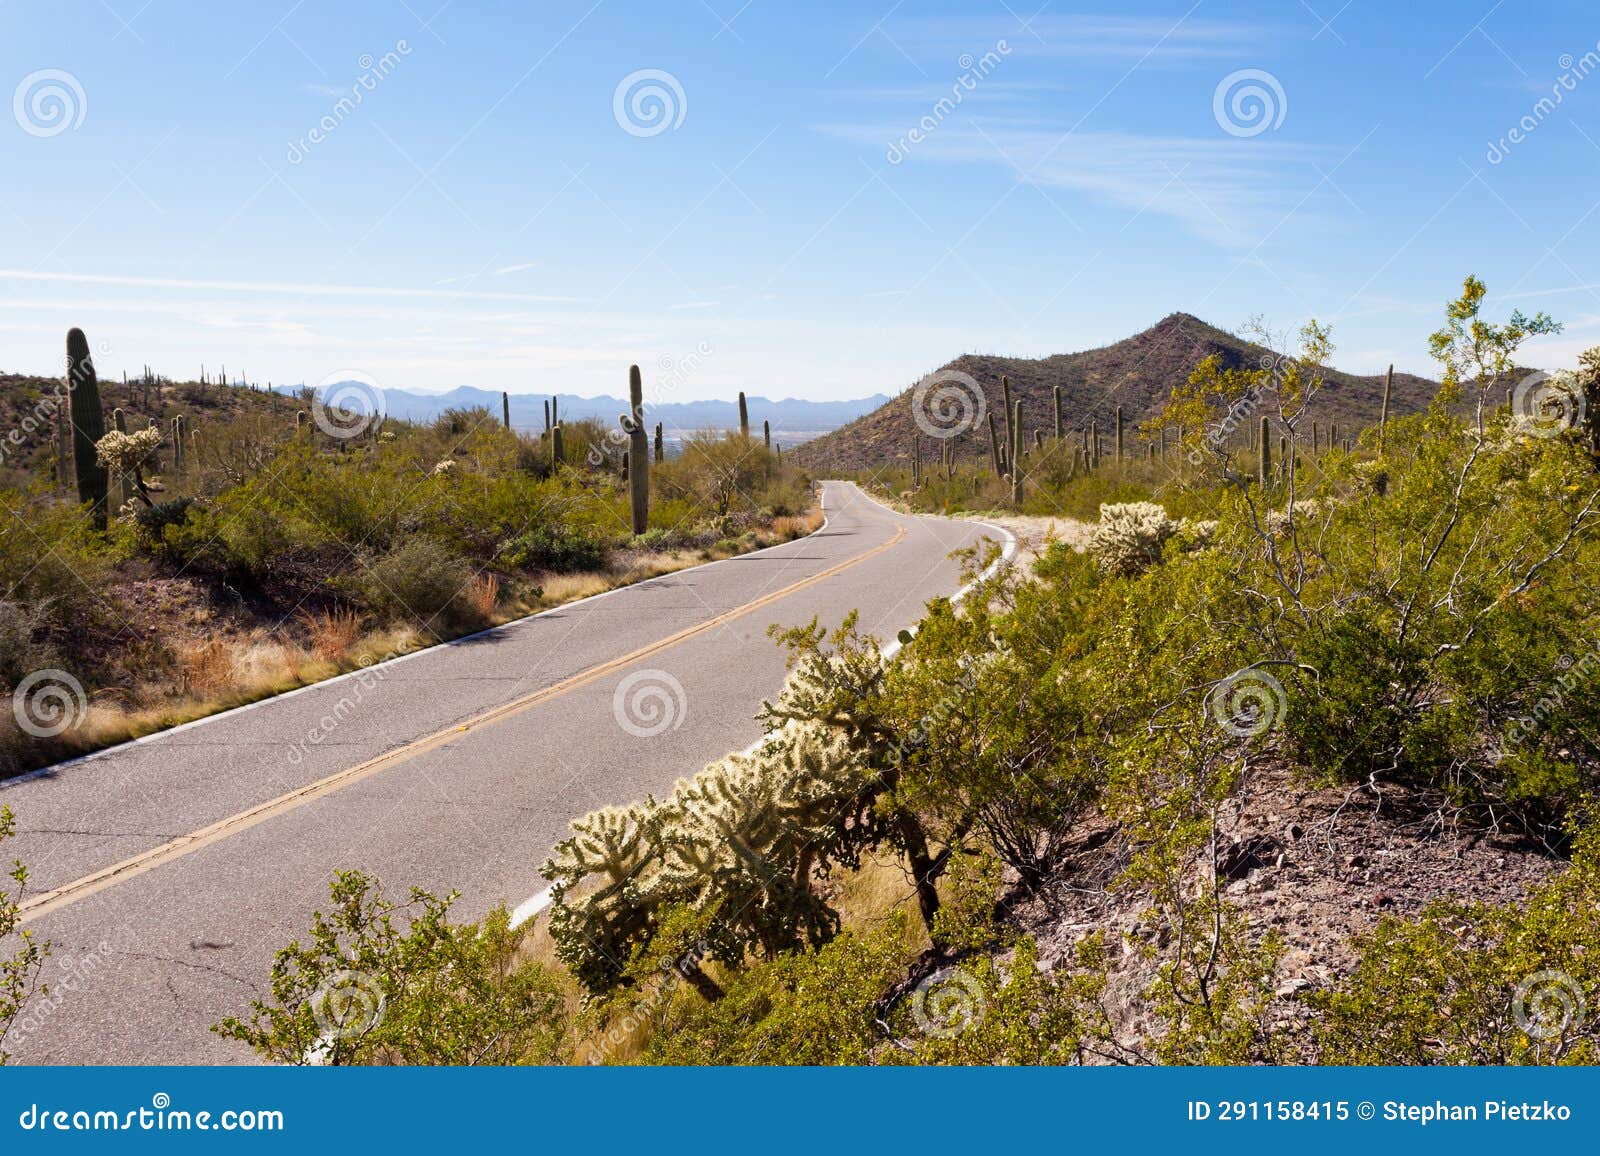 empty paved road in saguaro np near tucson az us